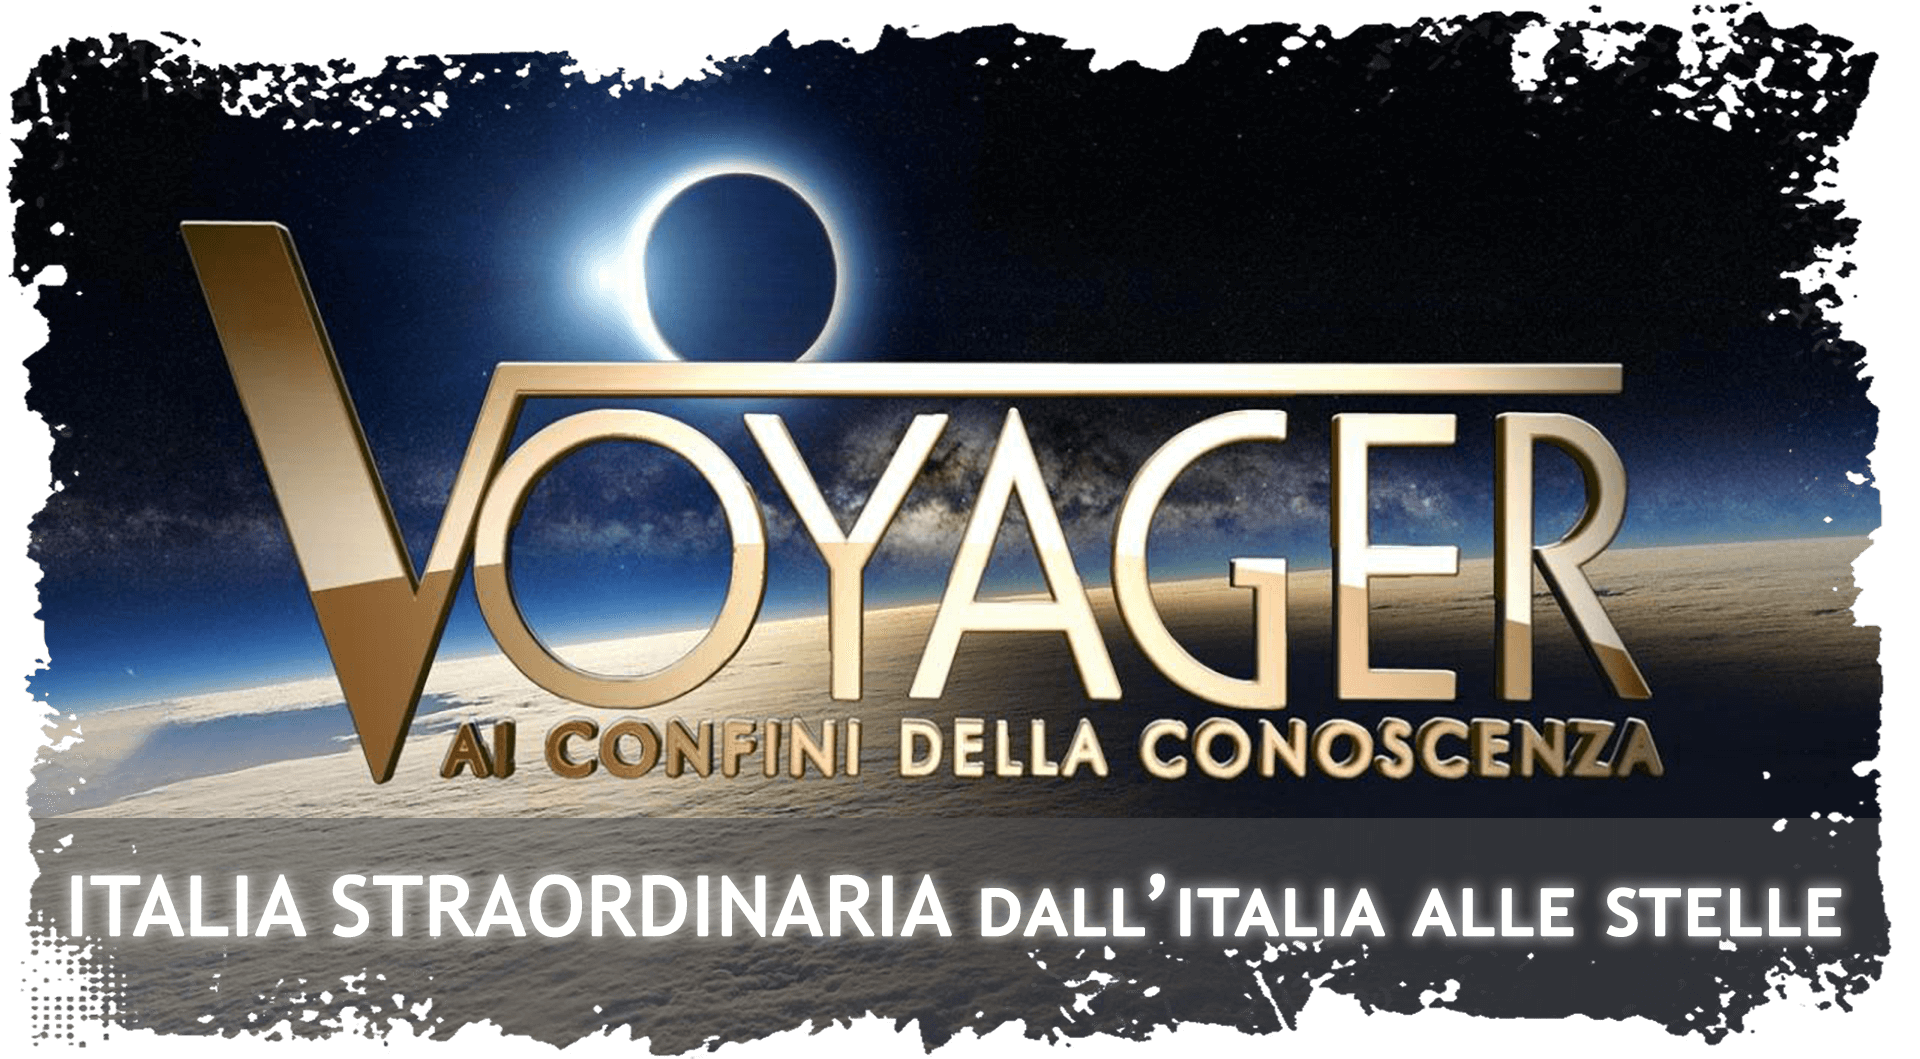 Voyager puntata dall'Italia alle stelle